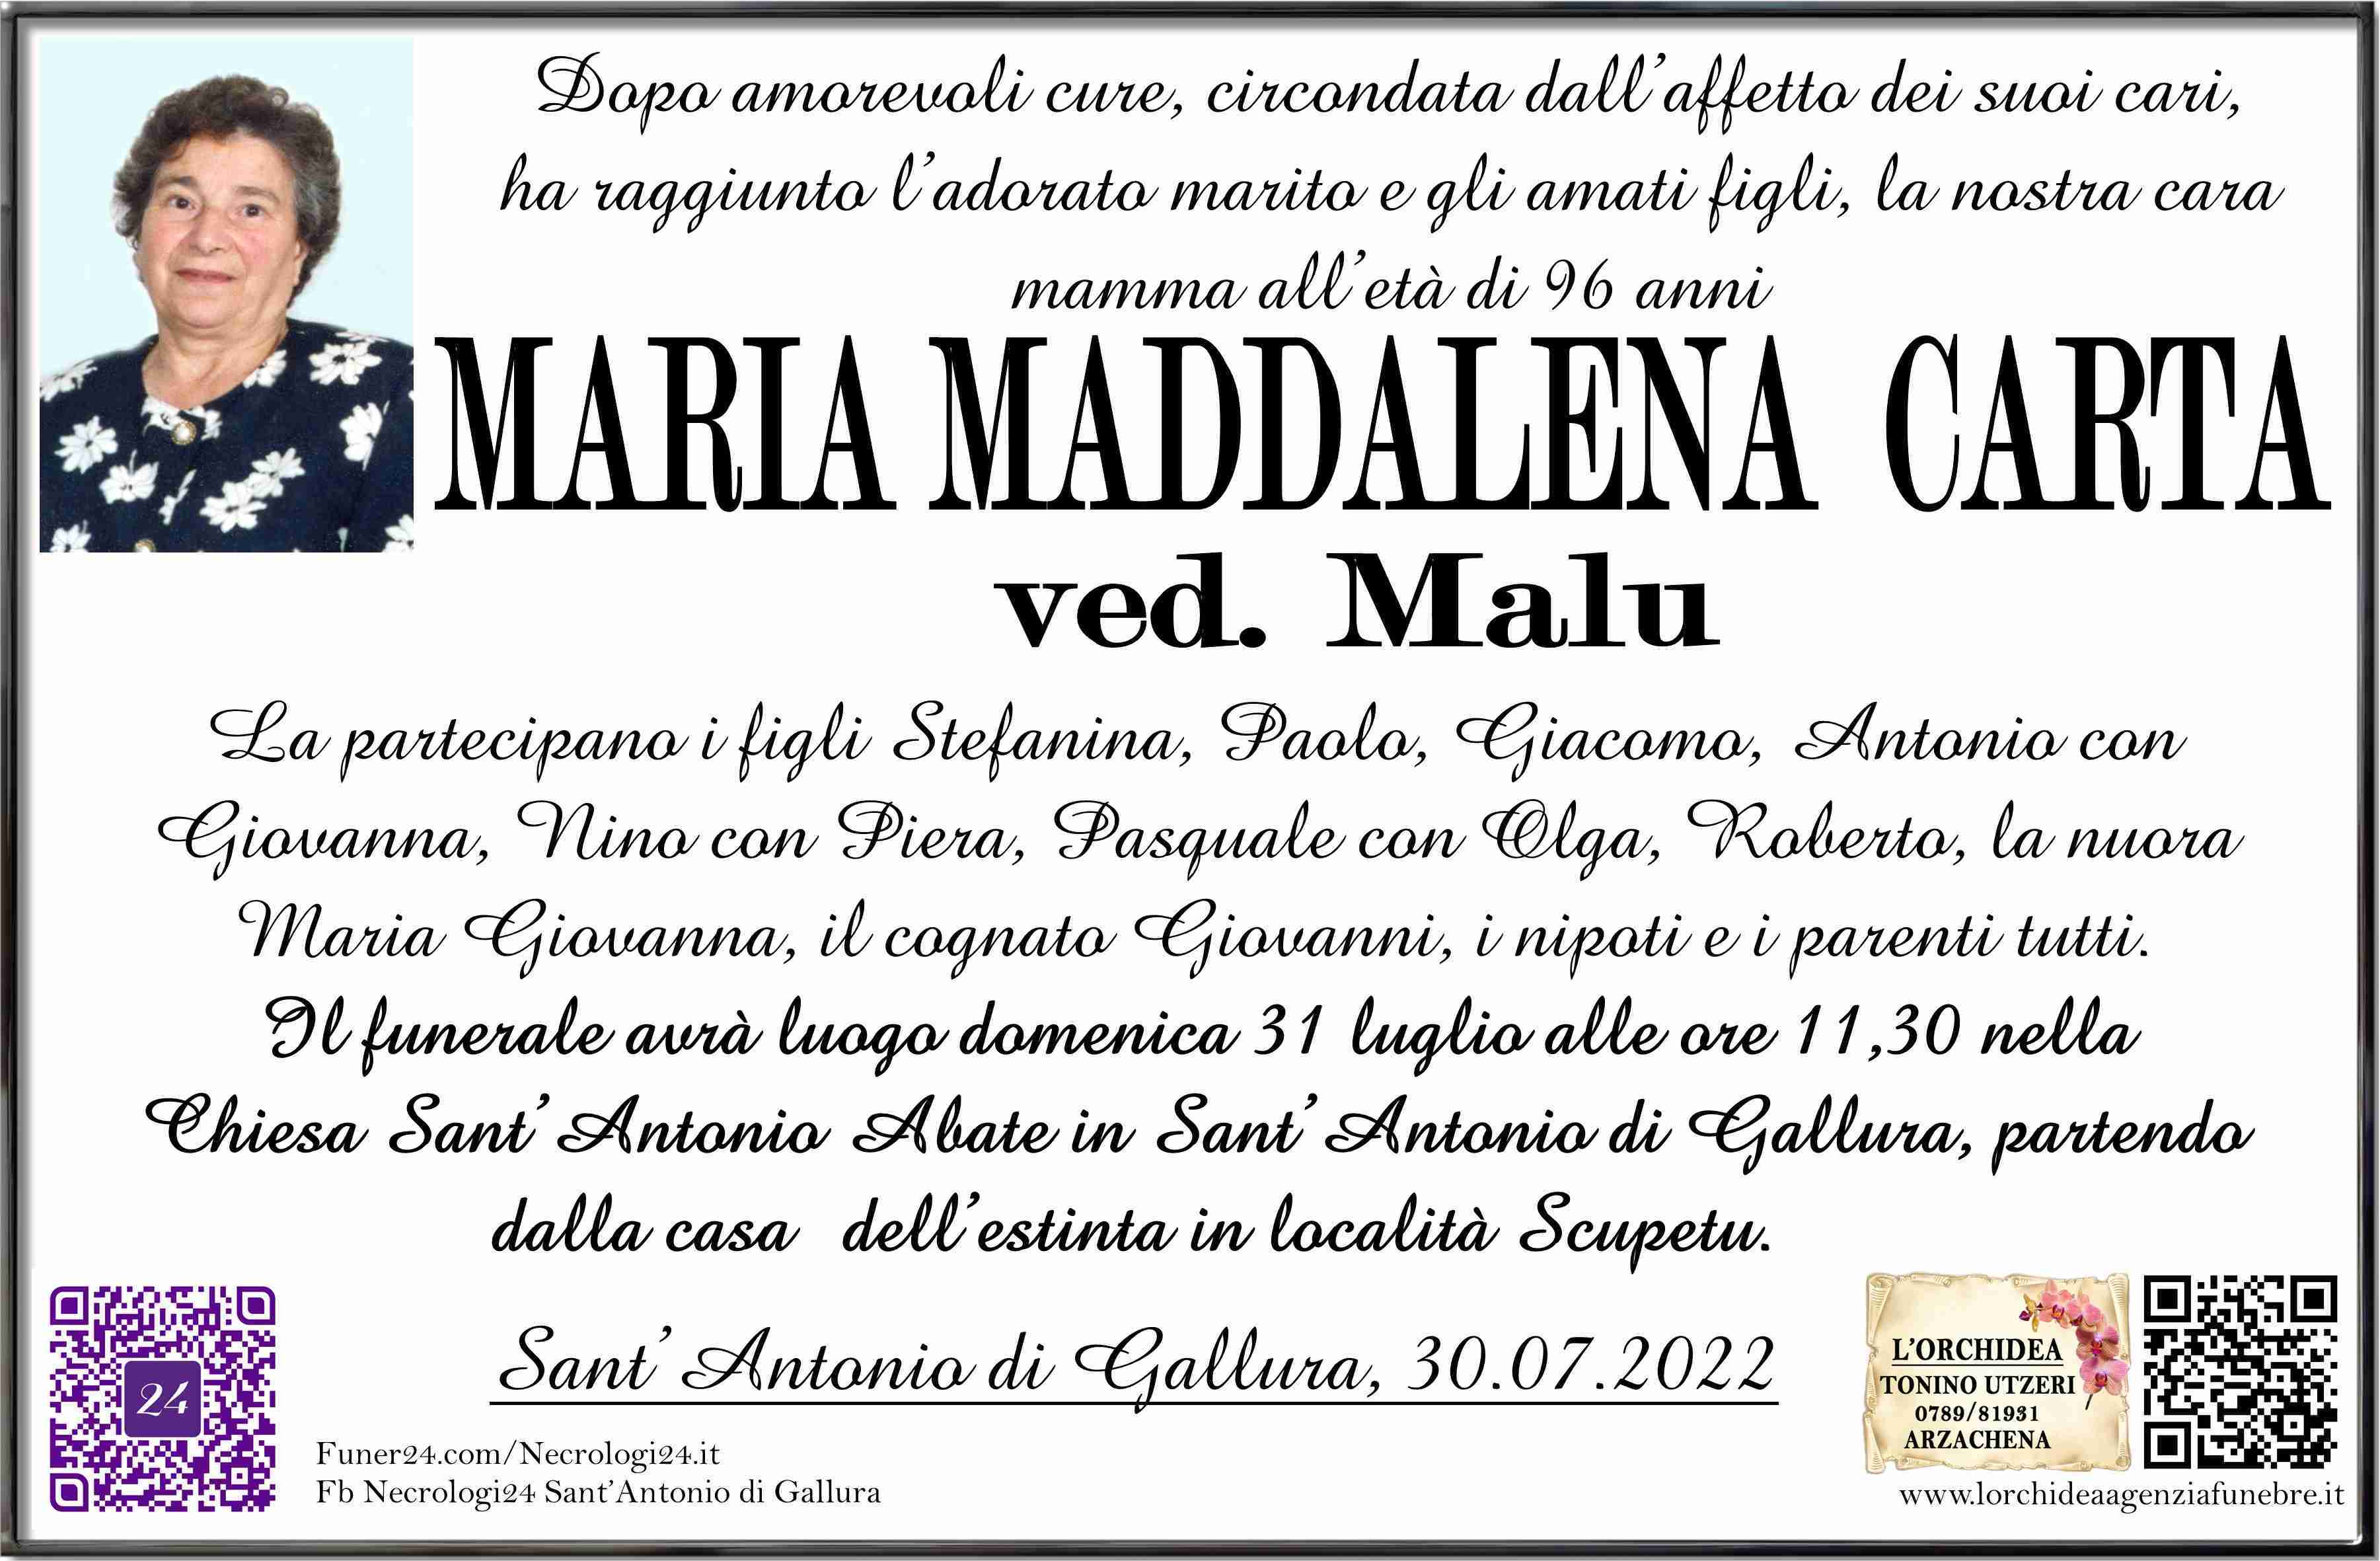 Maria Maddalena Carta